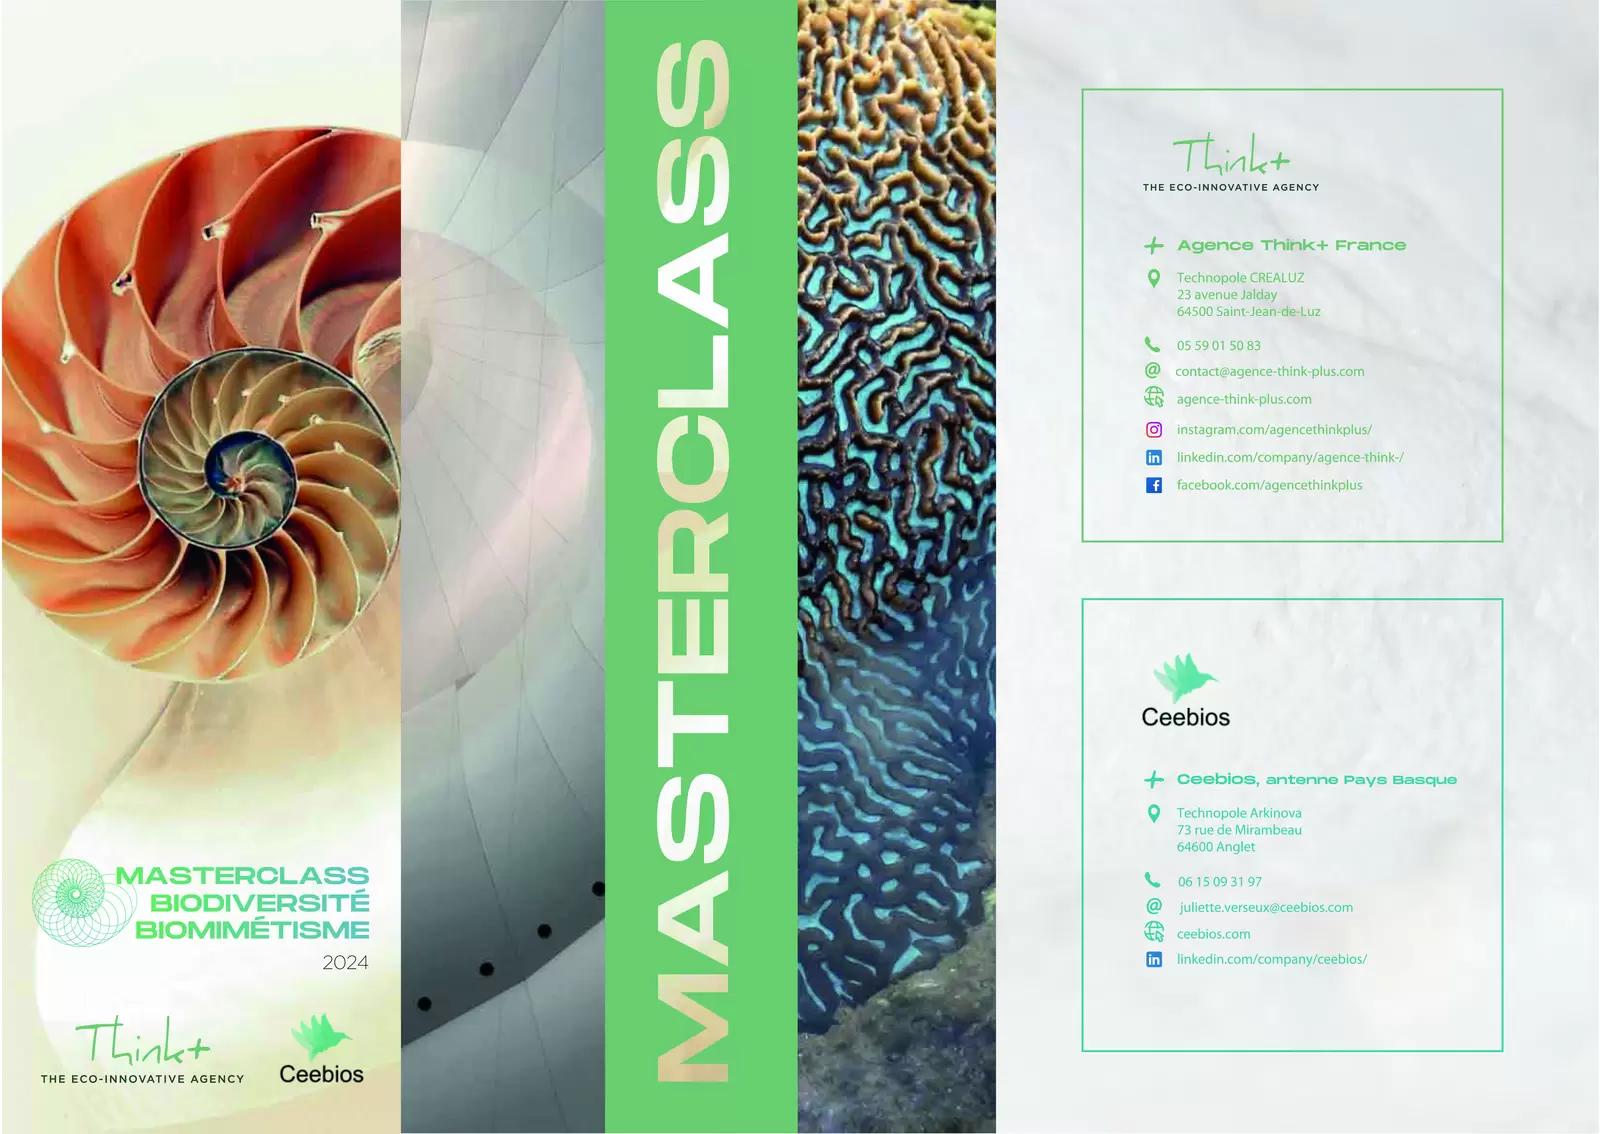 [EVENEMENT] Invitation Masterclass biodiversité & biomimetisme 2024 - Agence Think+